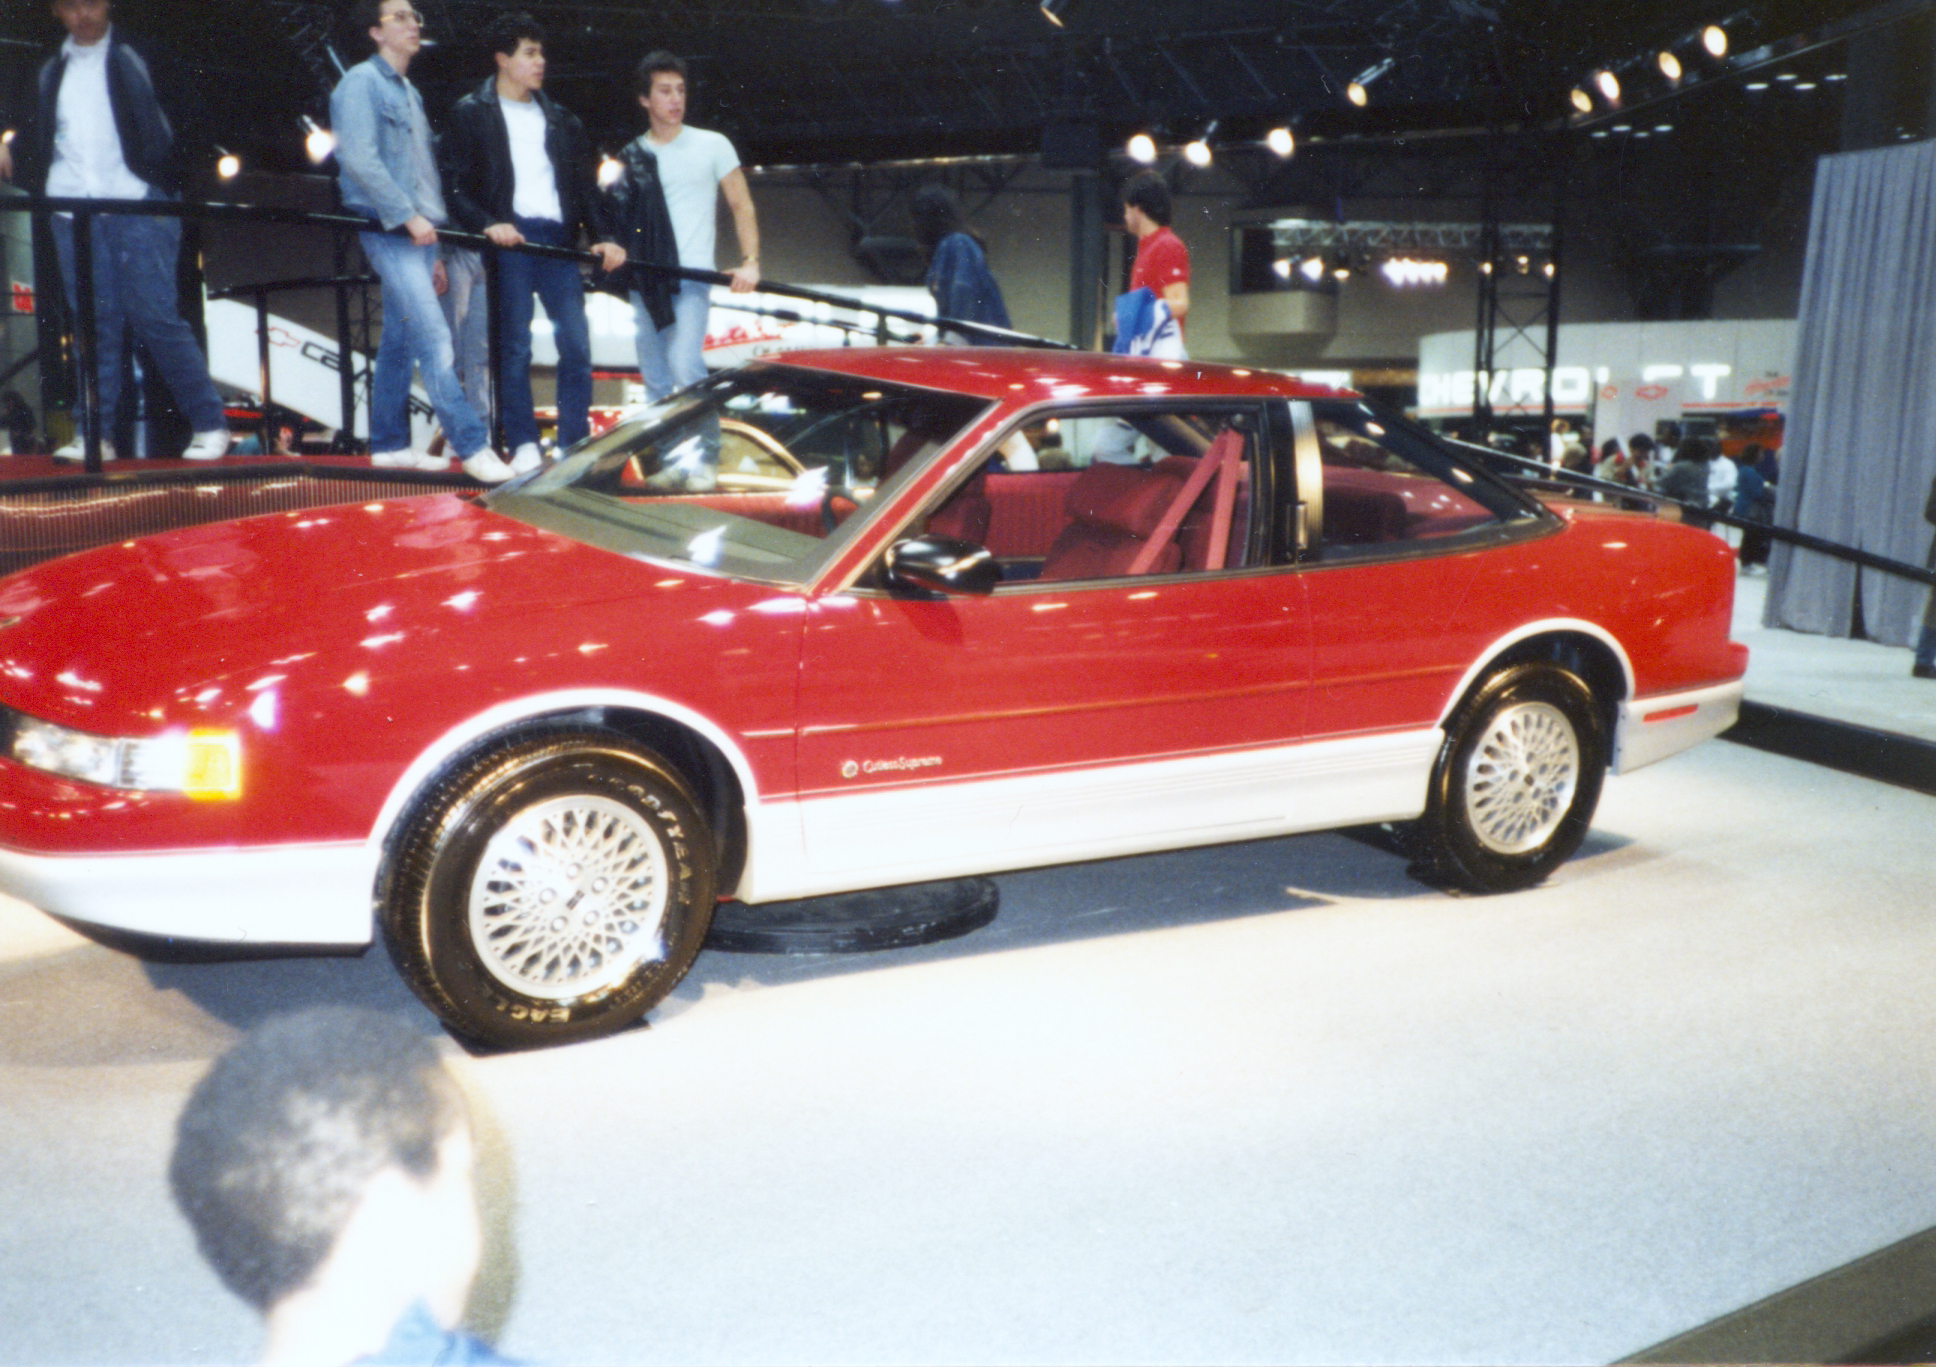 1988-Oldsmbobile-Cutlass-Supreme-at-the-1988-NY-Auto-Show.jpg.94a4737779a28f0e2fcfc824456e9307.jpg